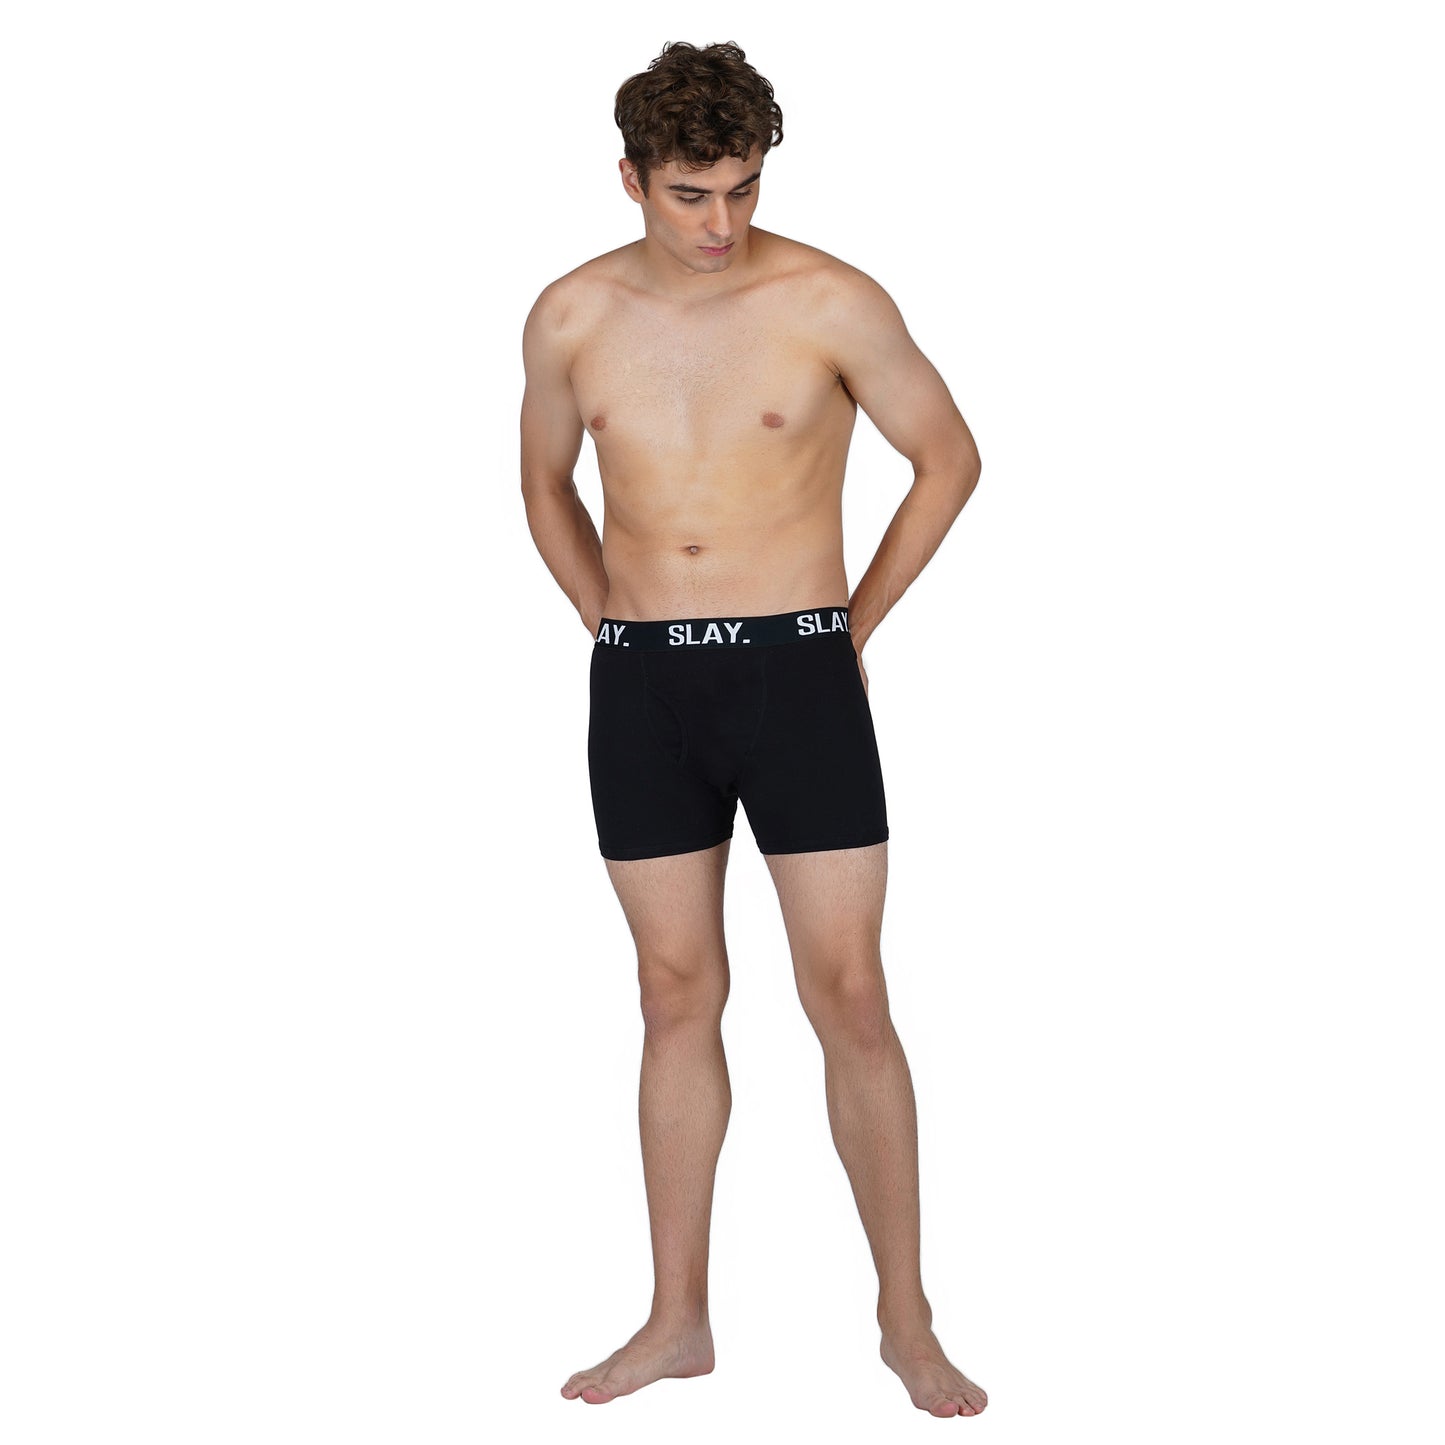 SLAY. Men's Black Underwear Trunks